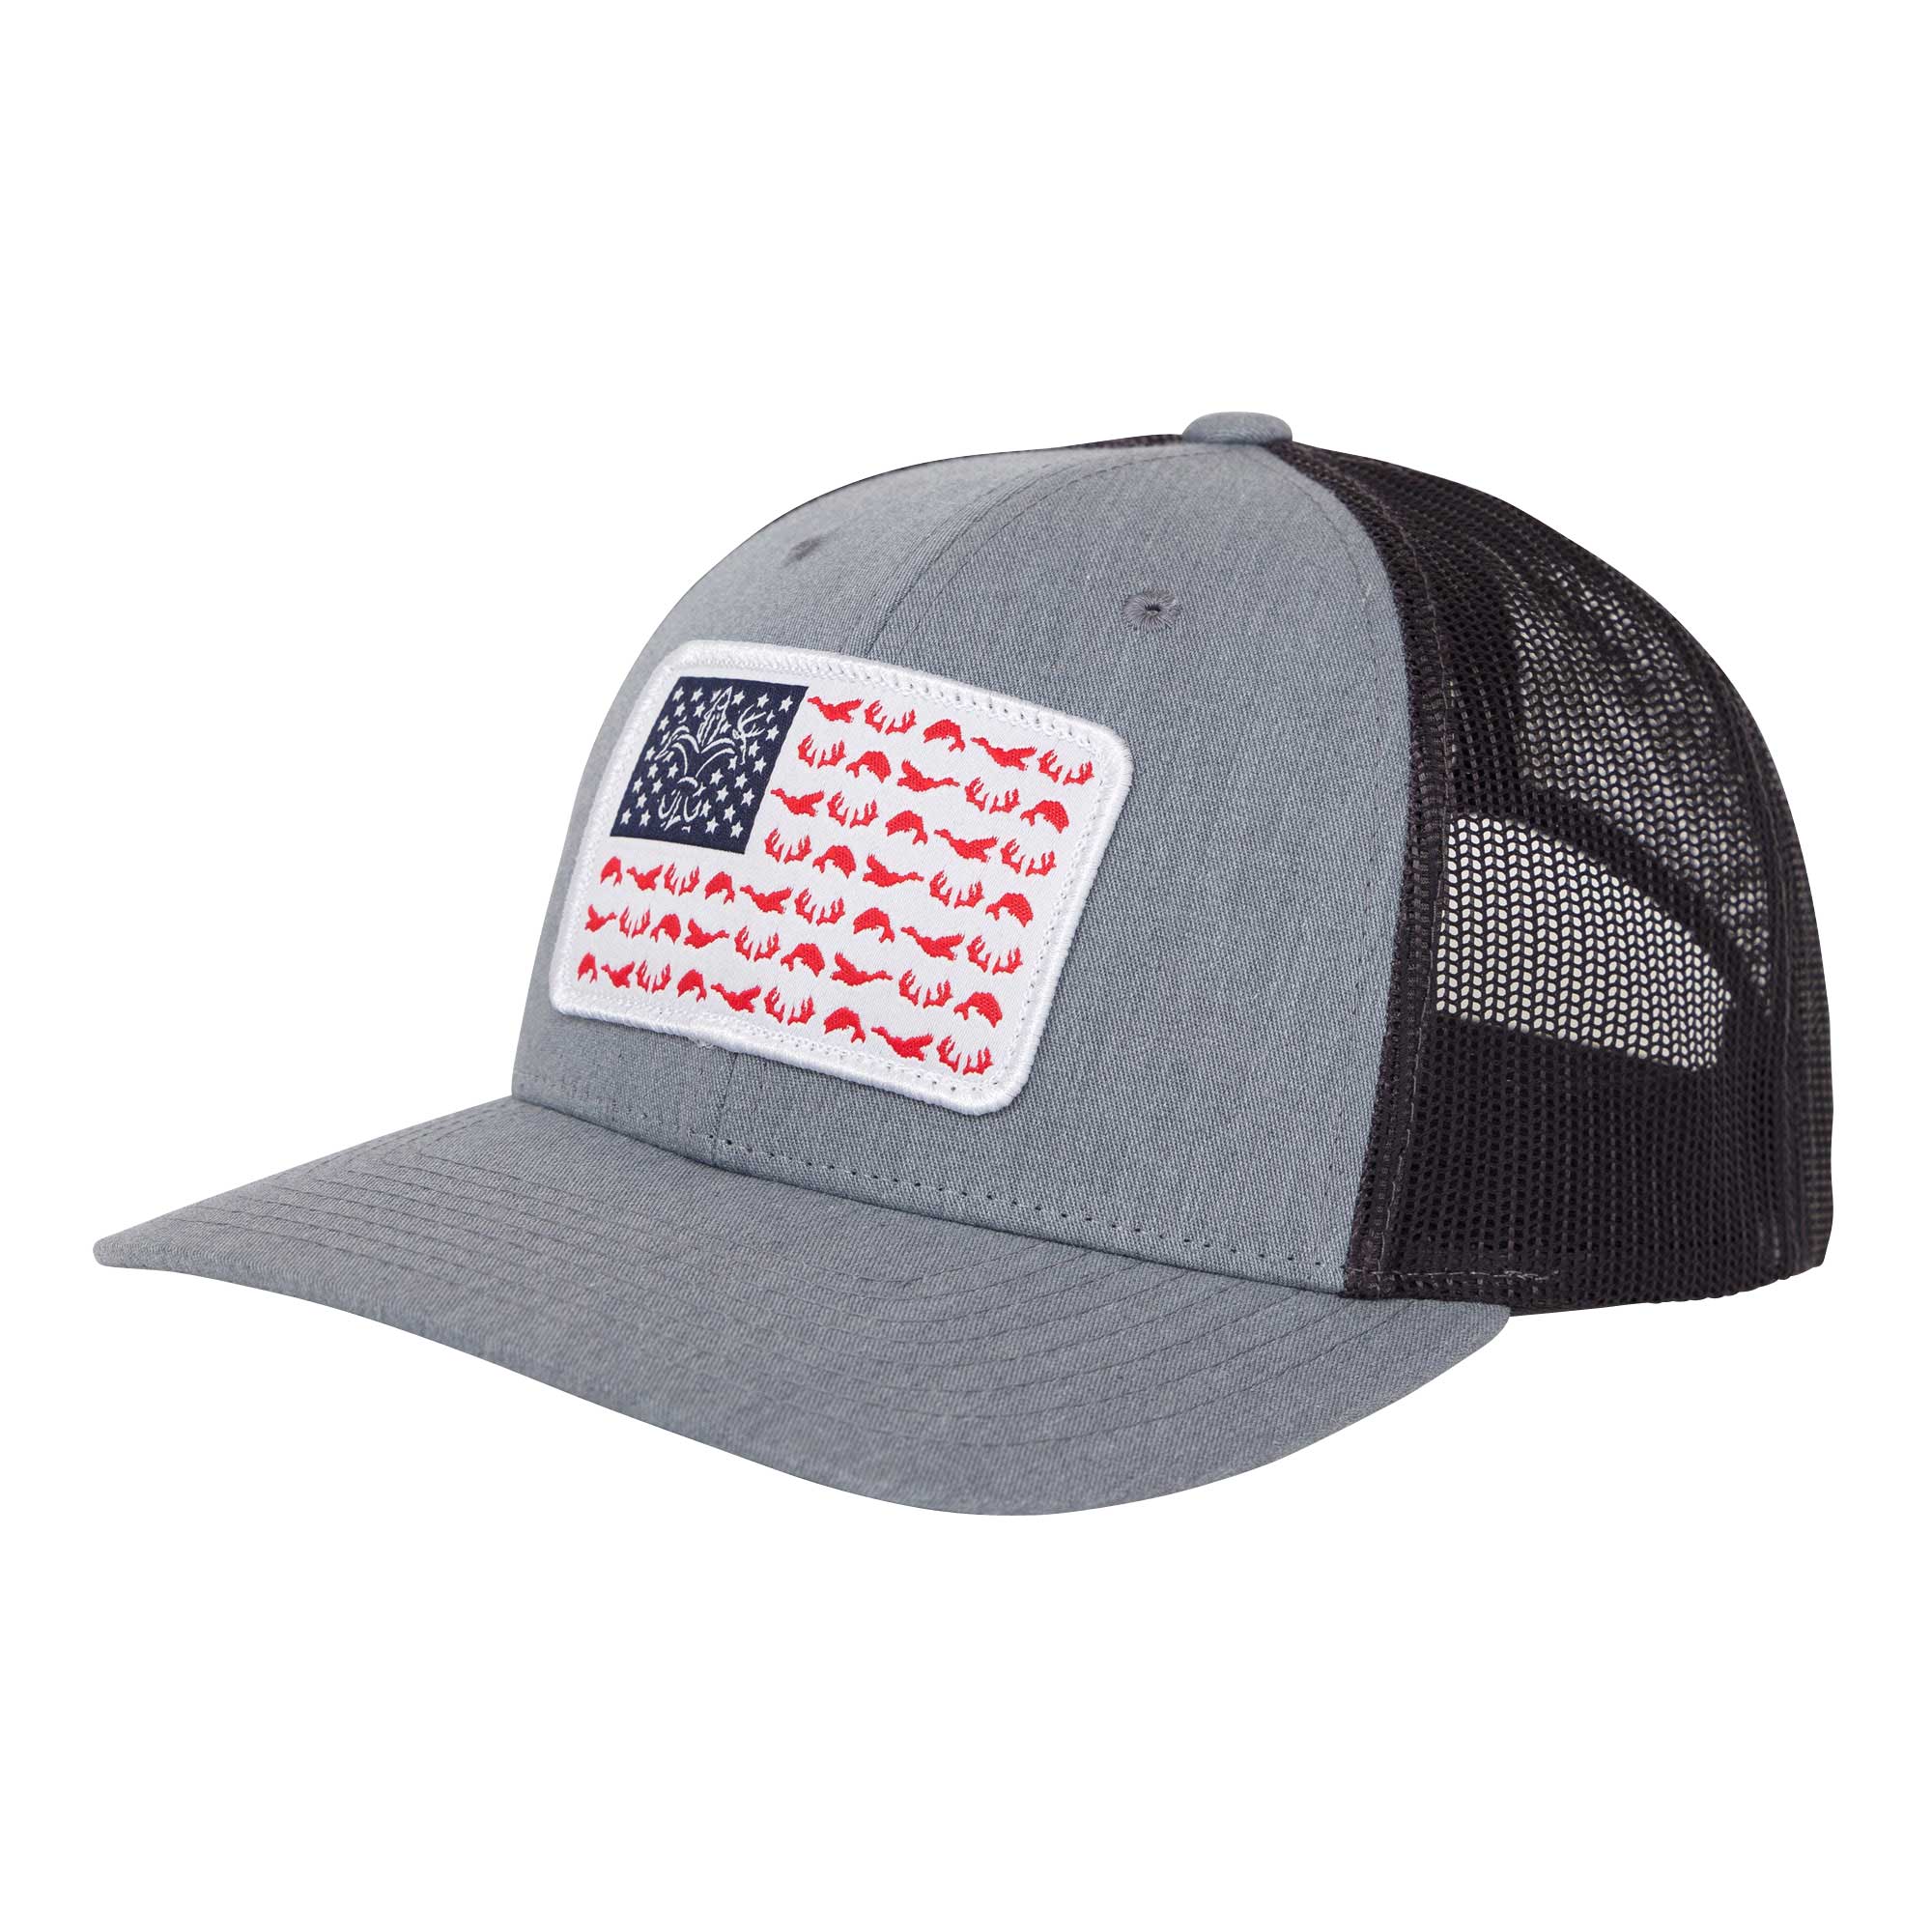 American Flag Snapback Fishing Hat - Heather Grey/Charcoal, Heather Grey / Charcoal